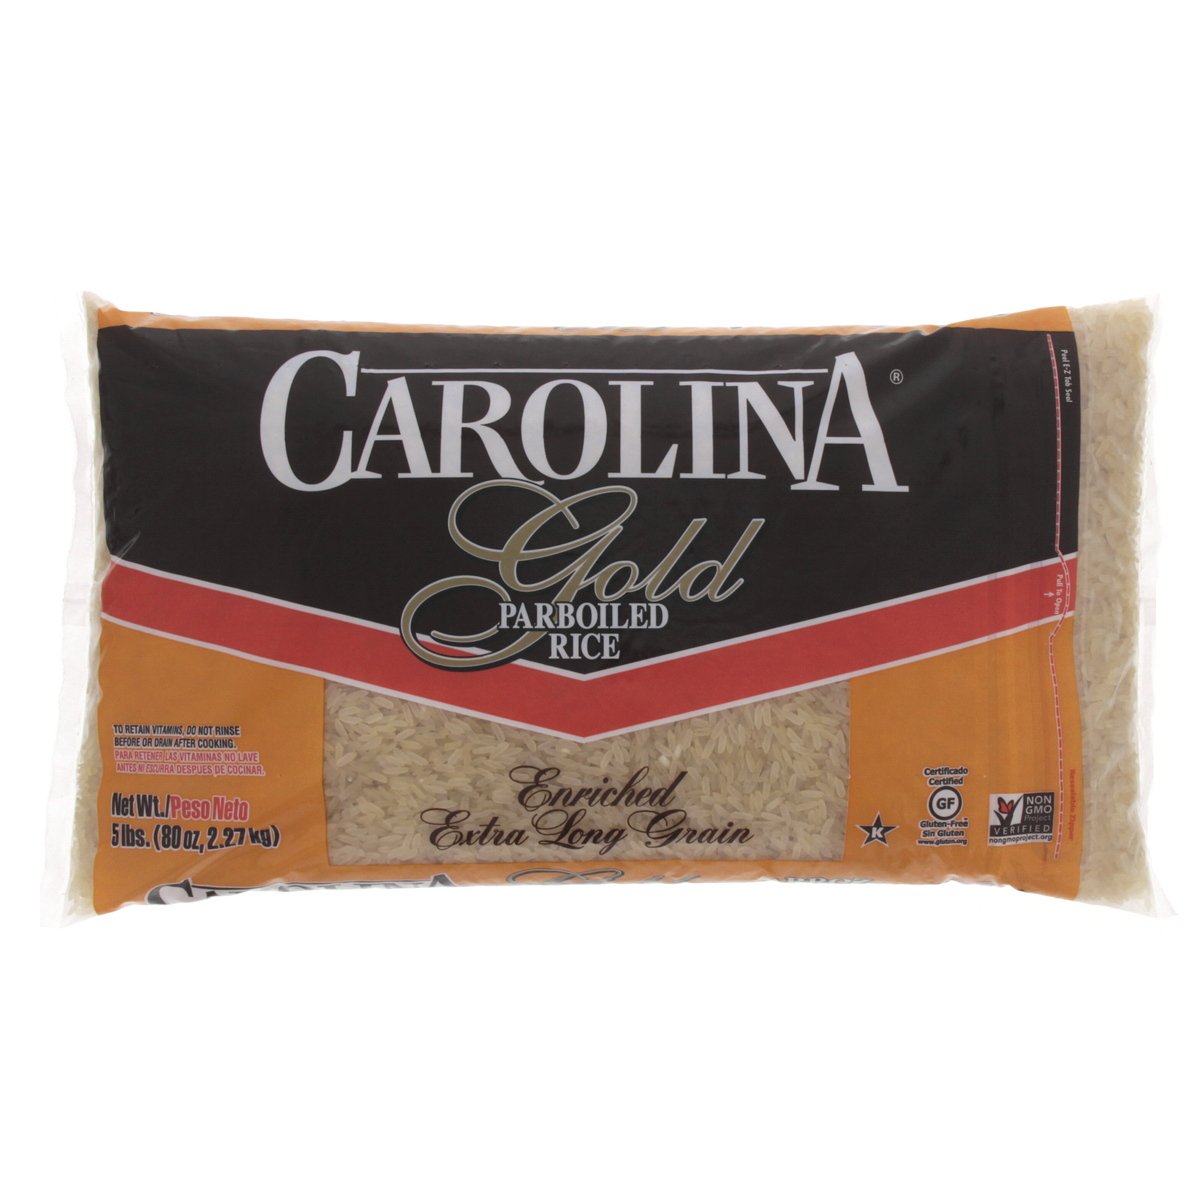 Carolina Gold Parboiled Rice 2.27 kg